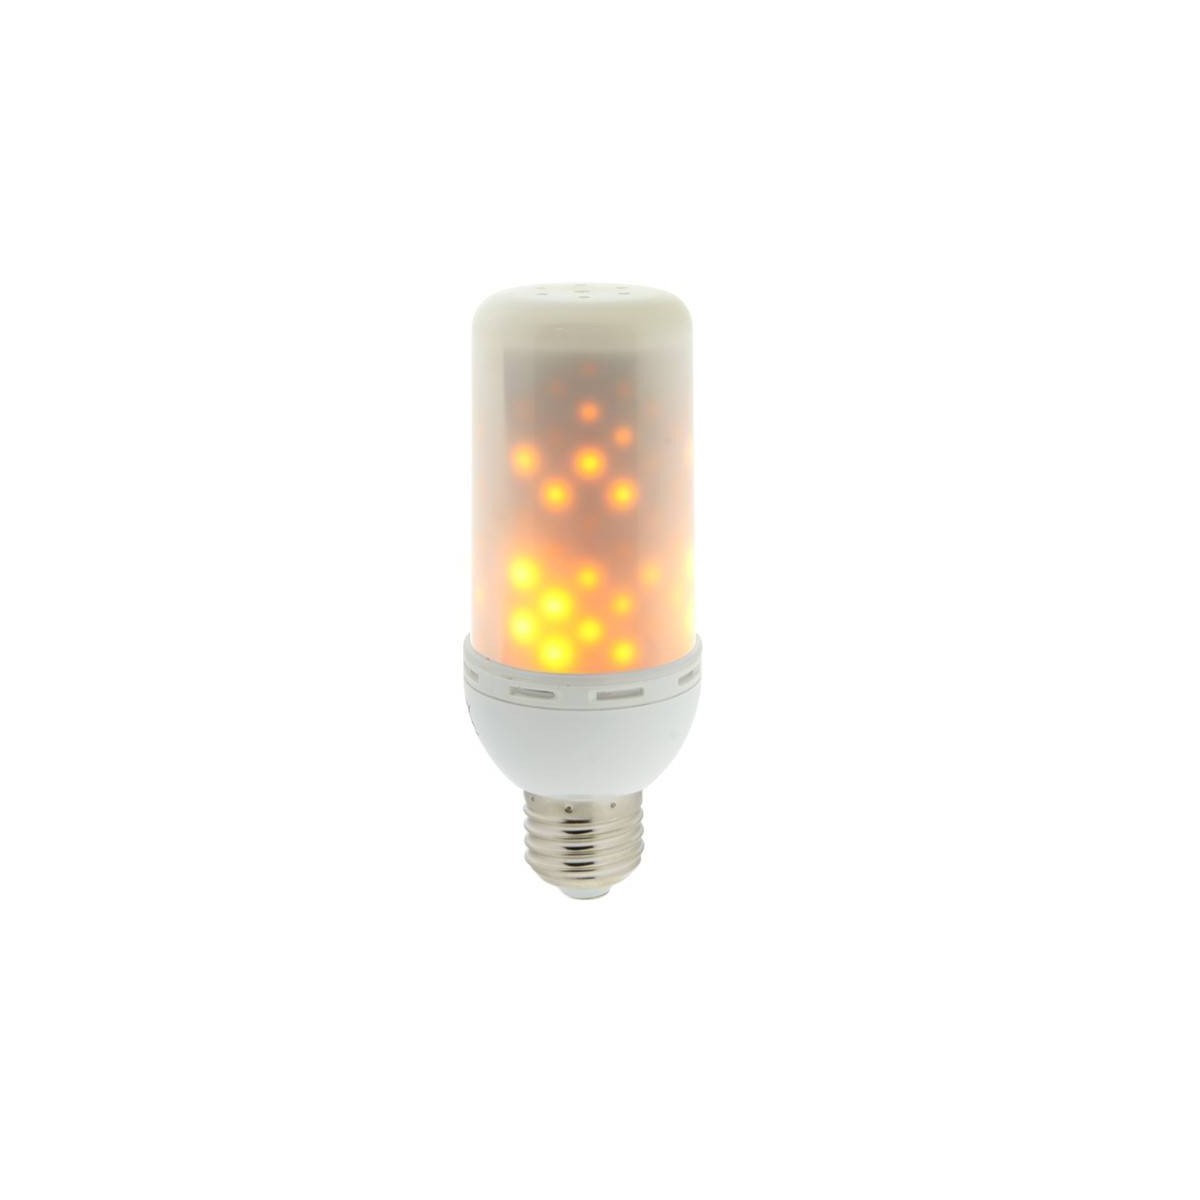 LED-Glühbirne E27 4.5W Feuer-Flammen-Effekt